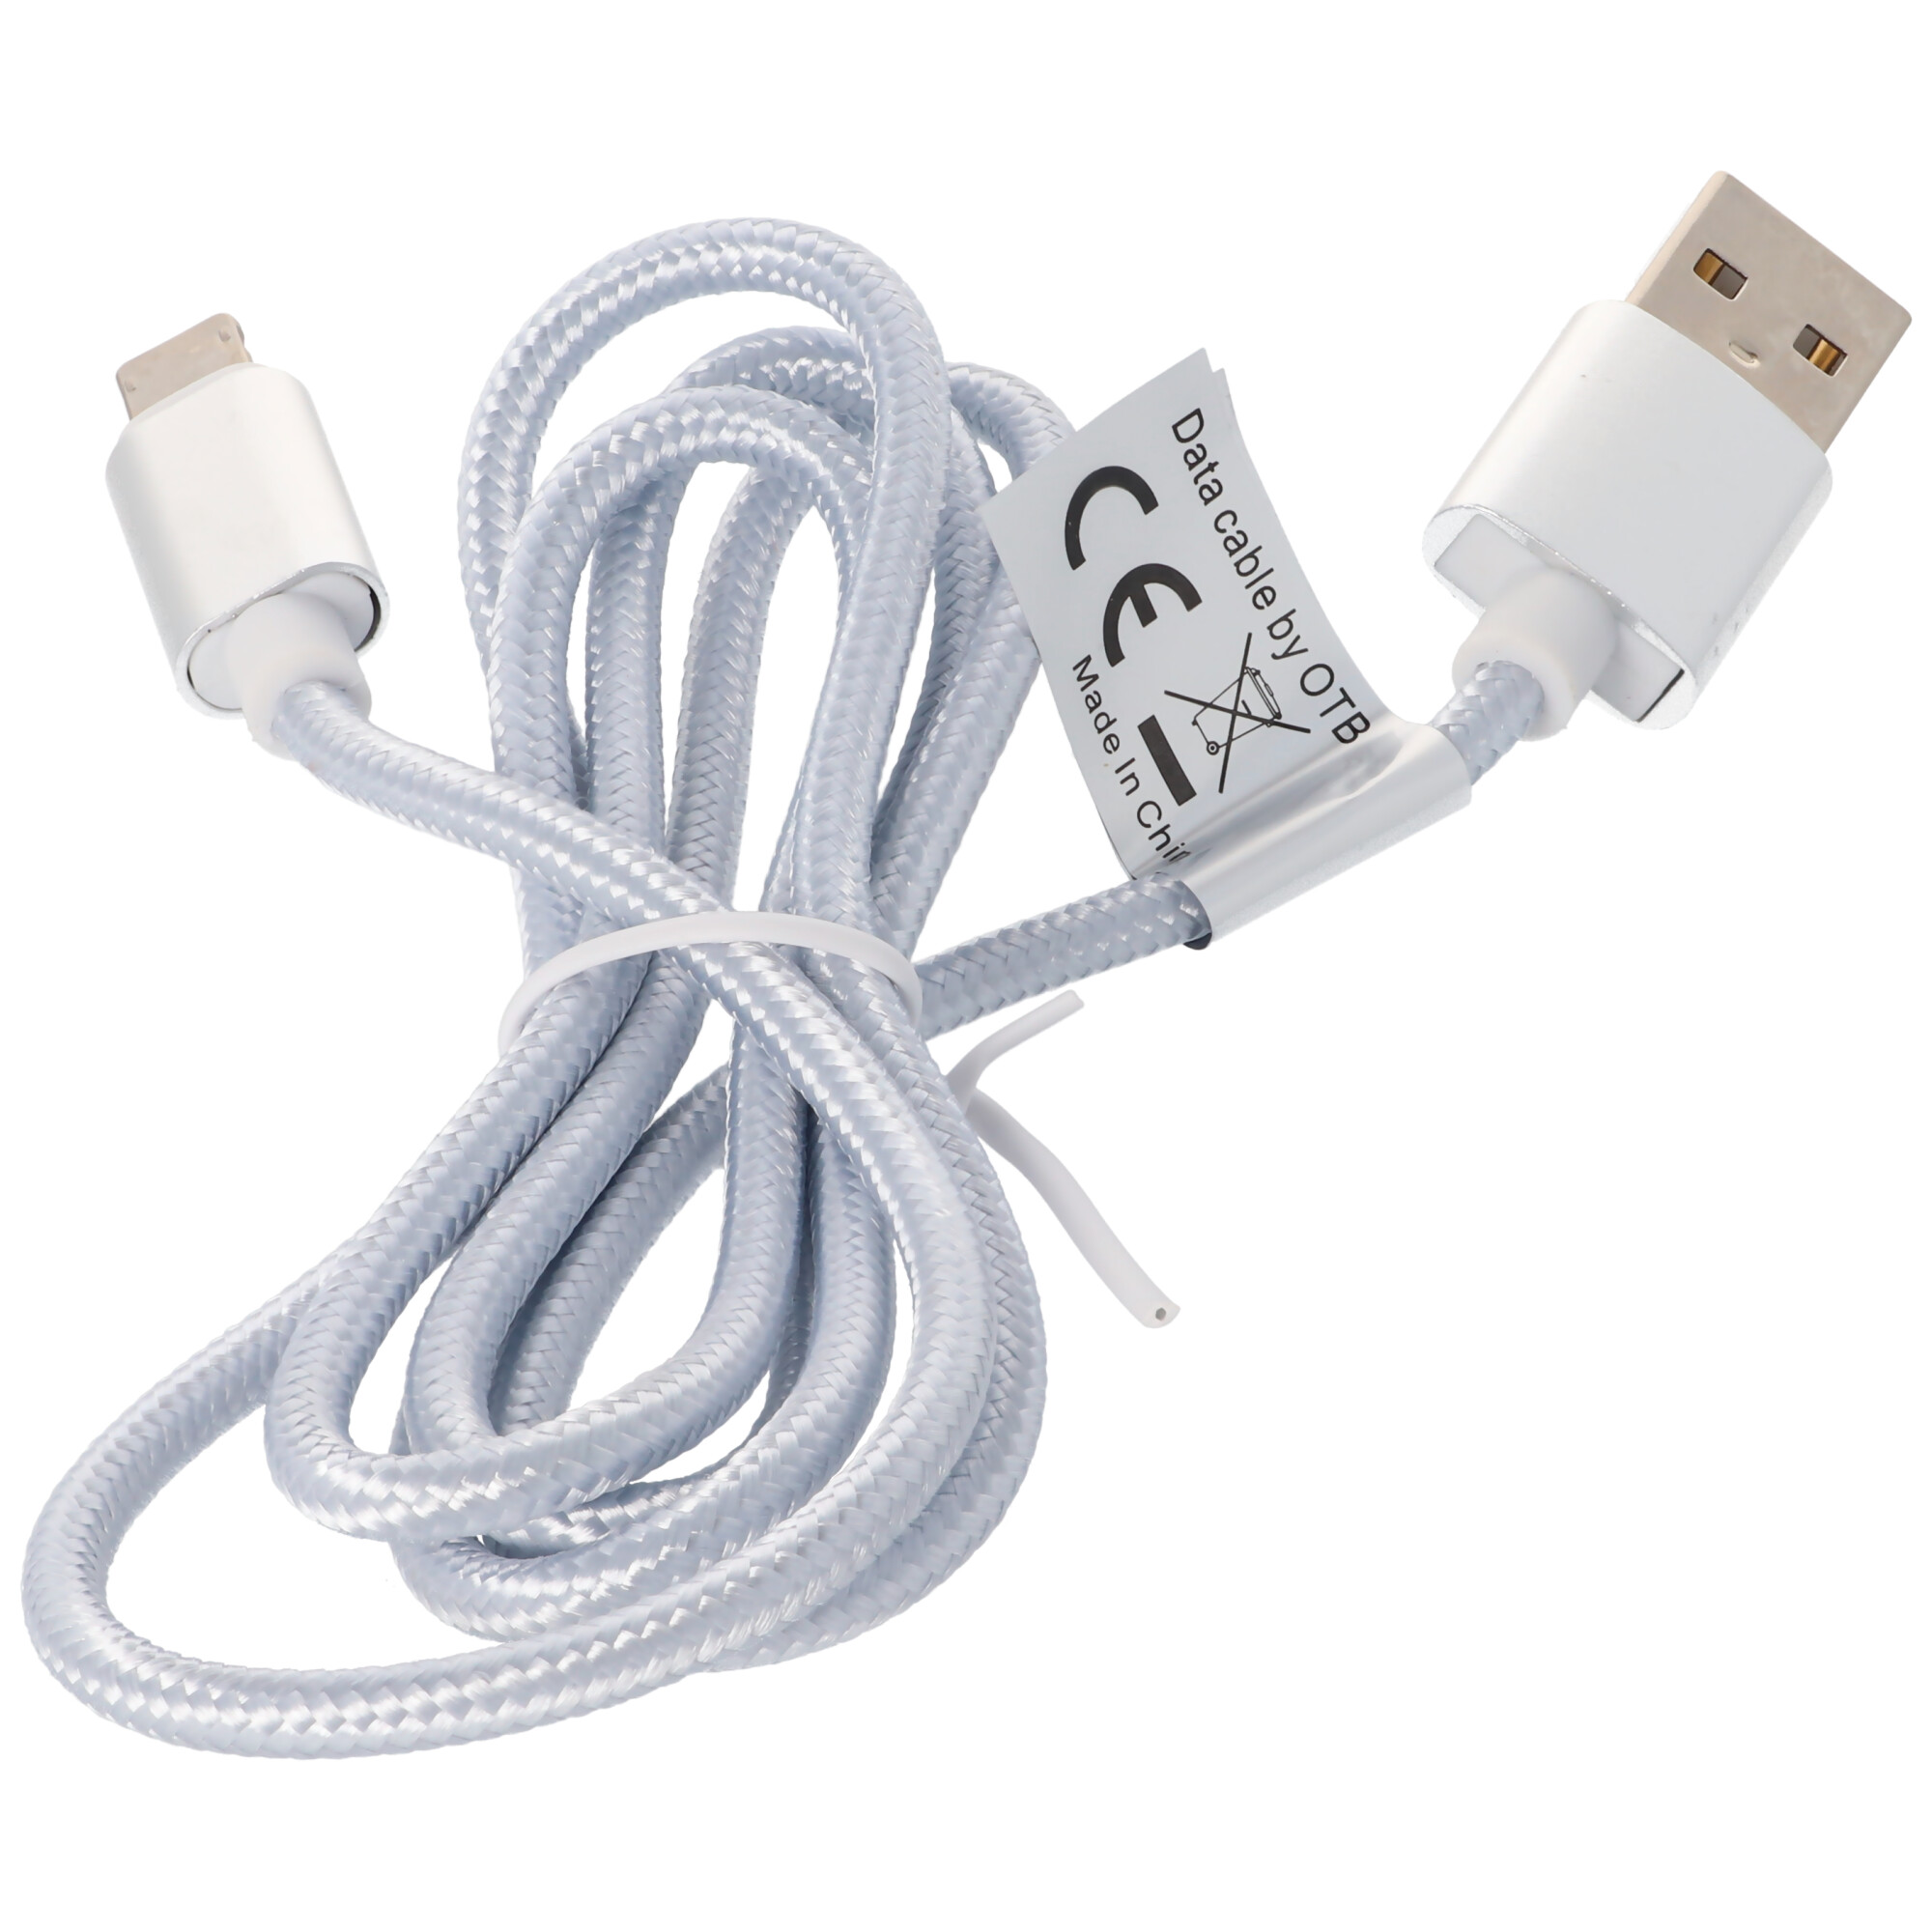 USB Datenkabel für Apple iPhone XS, Apple iPhone XS Max, Apple iPhone XR, innovativer 2in1 Stecker für iPhone und Micro USB, ca. 1 Meter lang, Silber